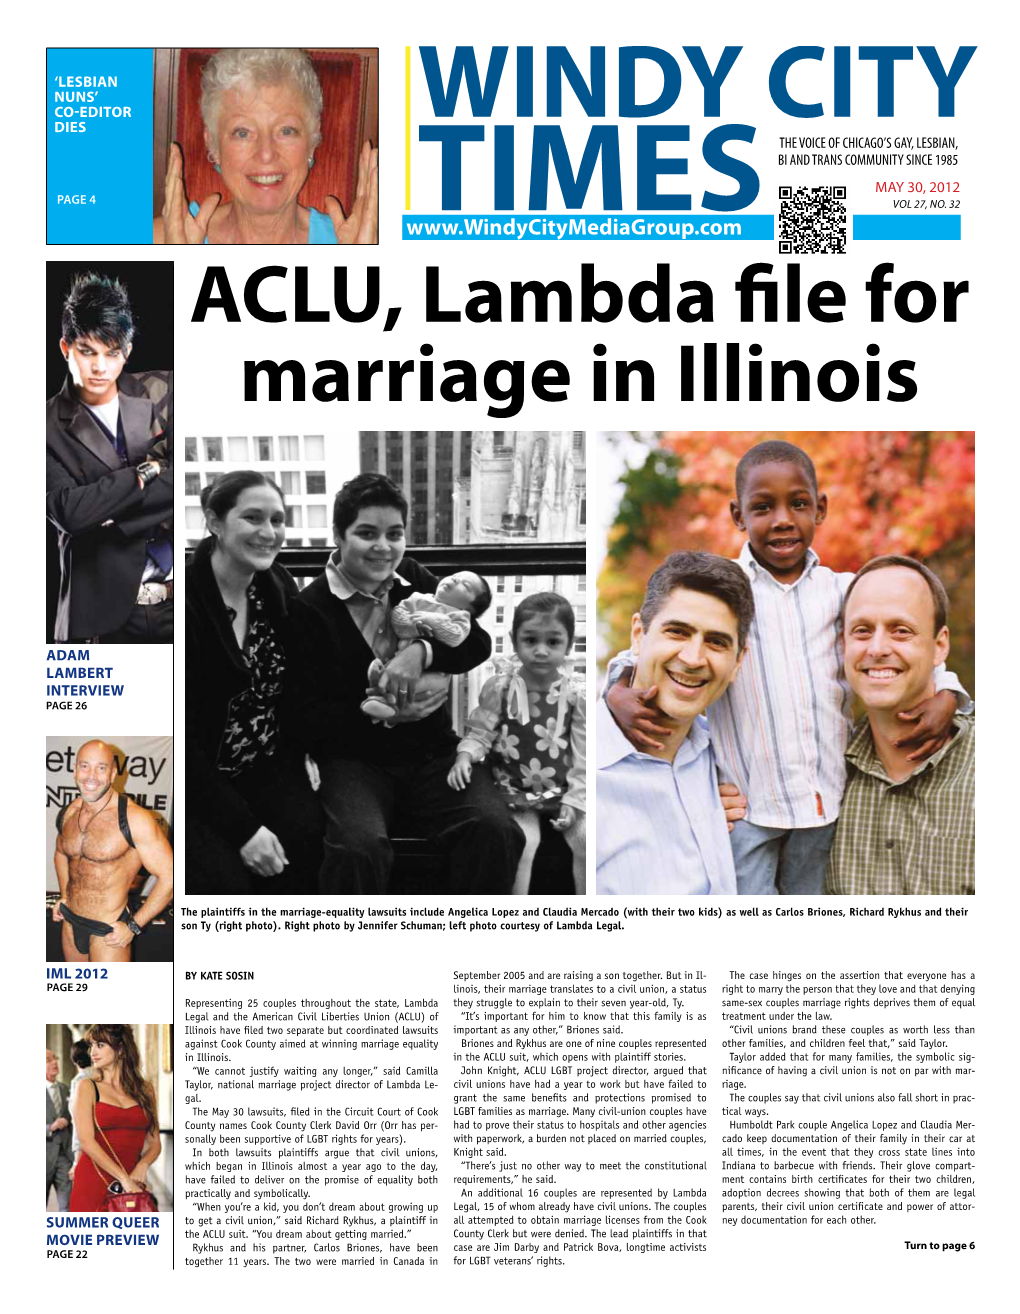 ACLU, Lambda File for Marriage in Illinois